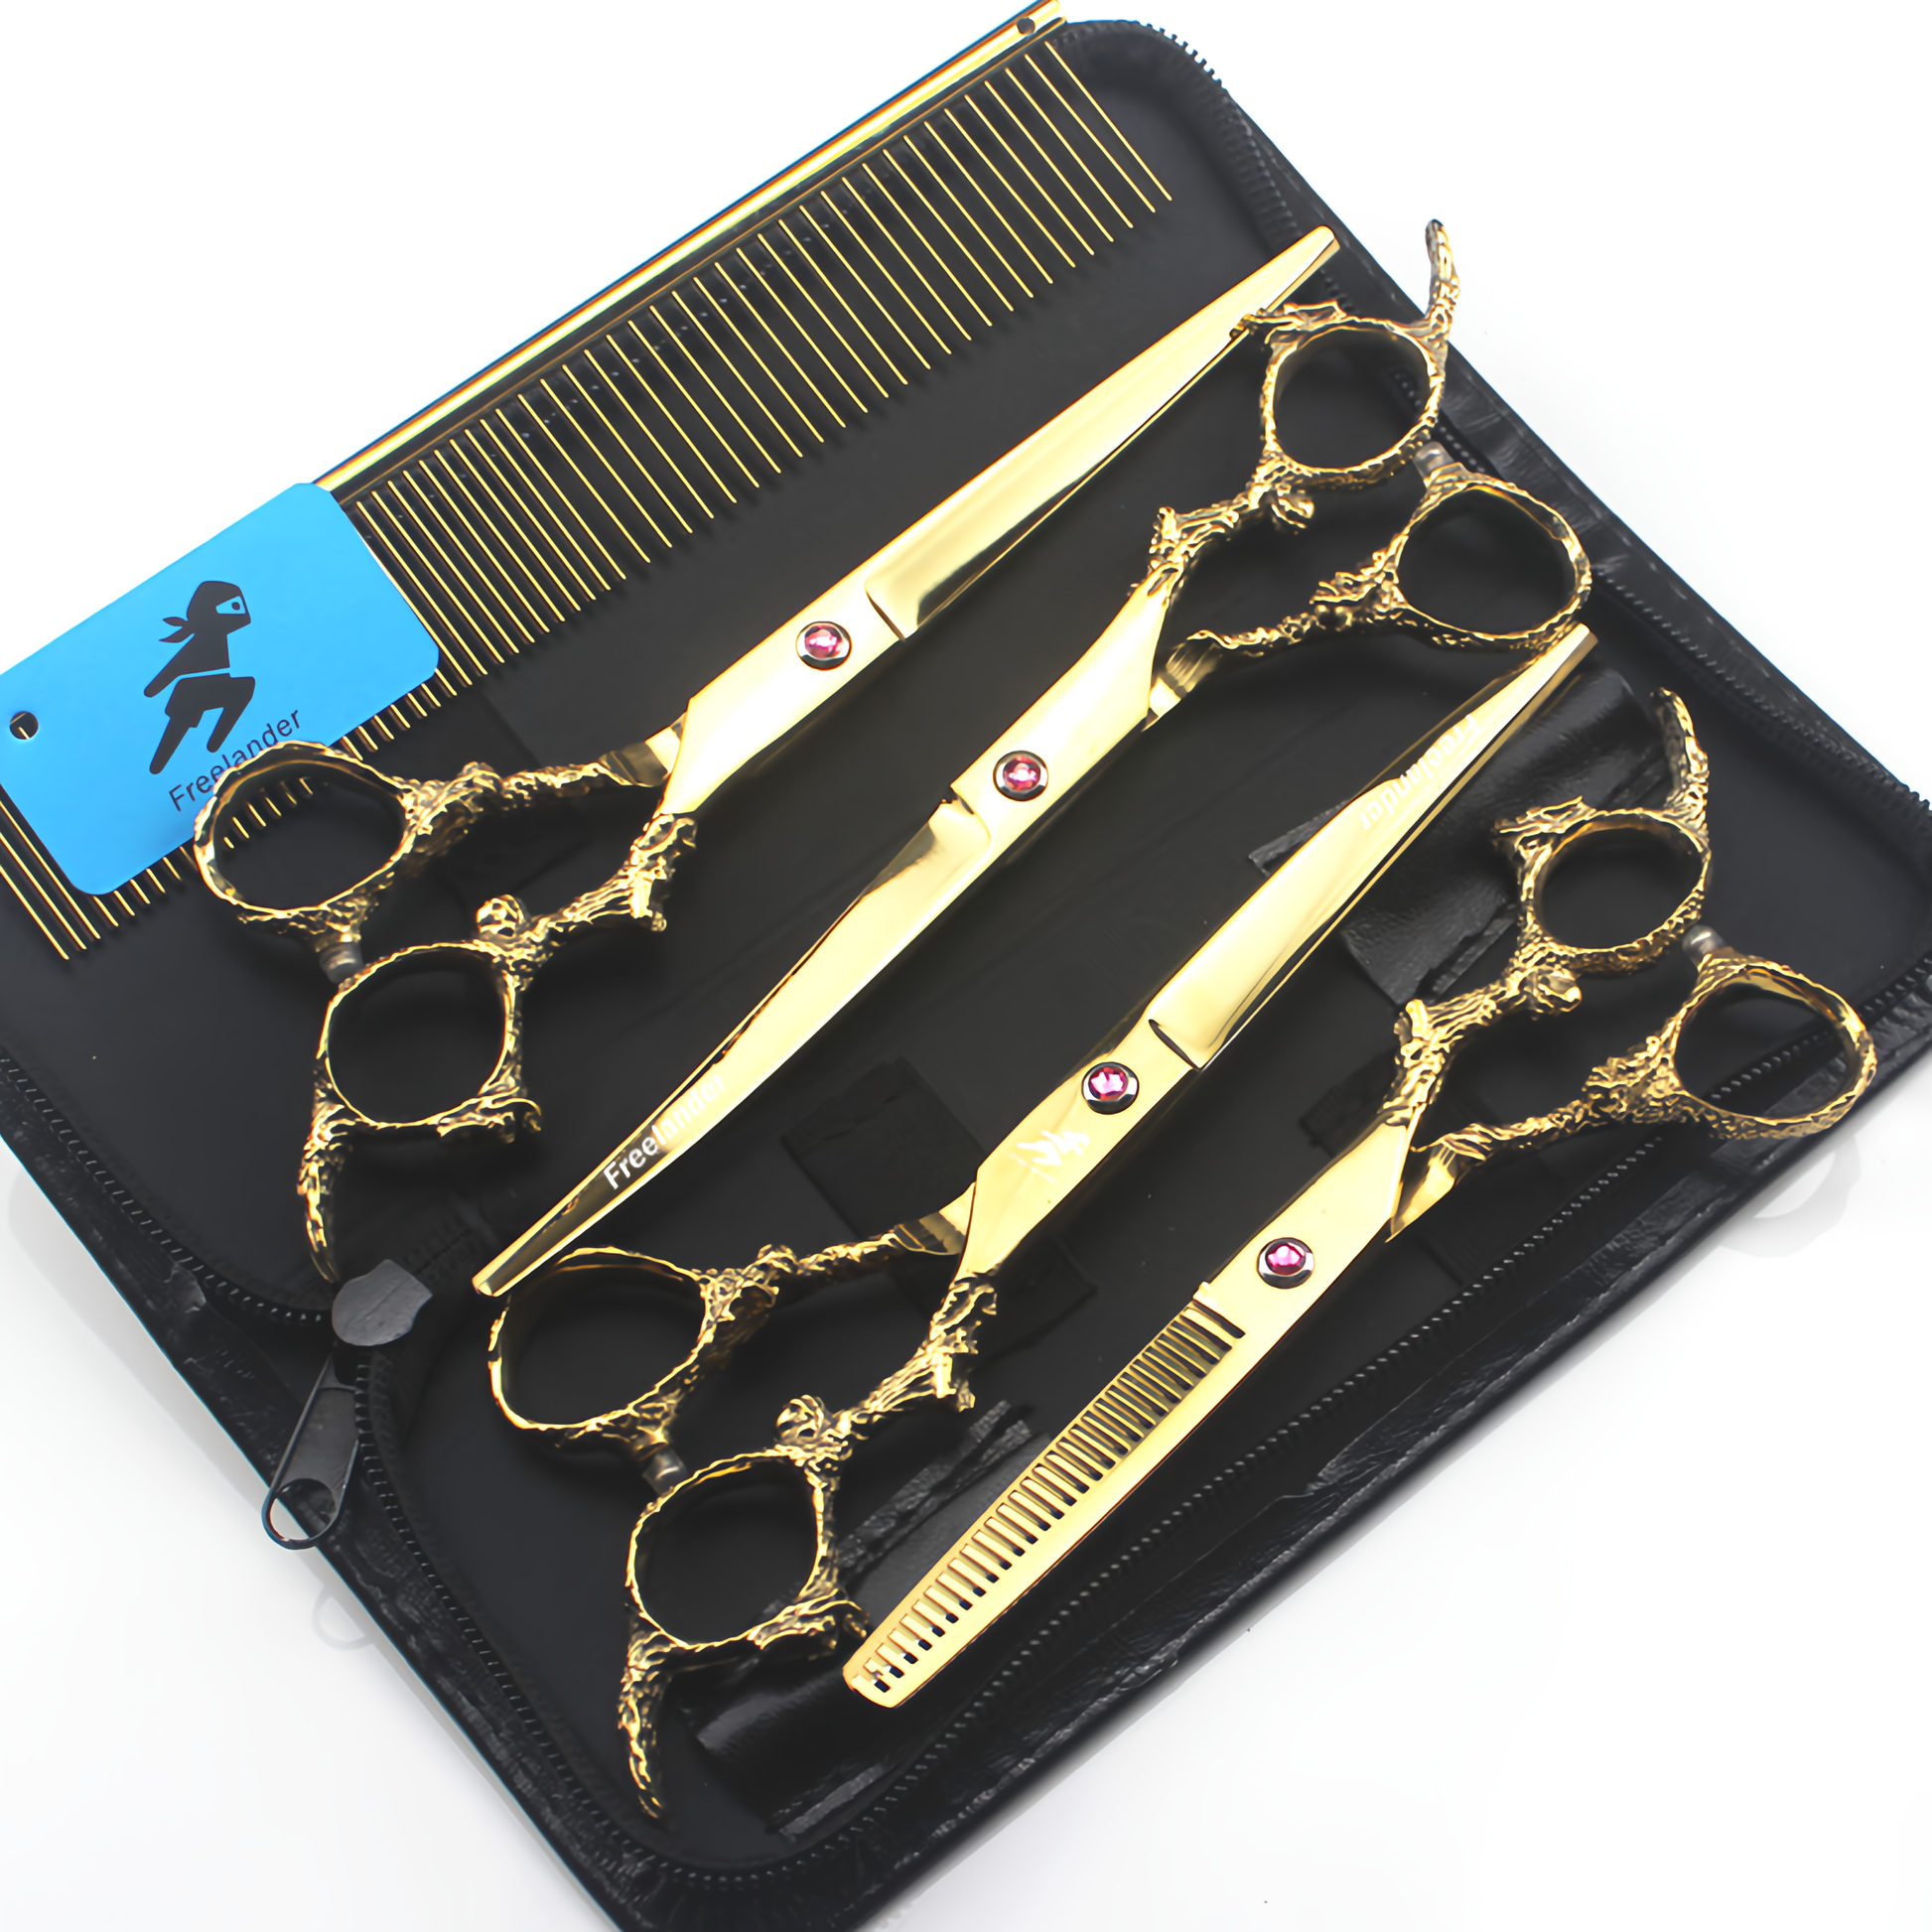 7.0 Inch Golden Dragon Handle 5 Pack Pet Grooming Scissors Set - Charismatic Critters